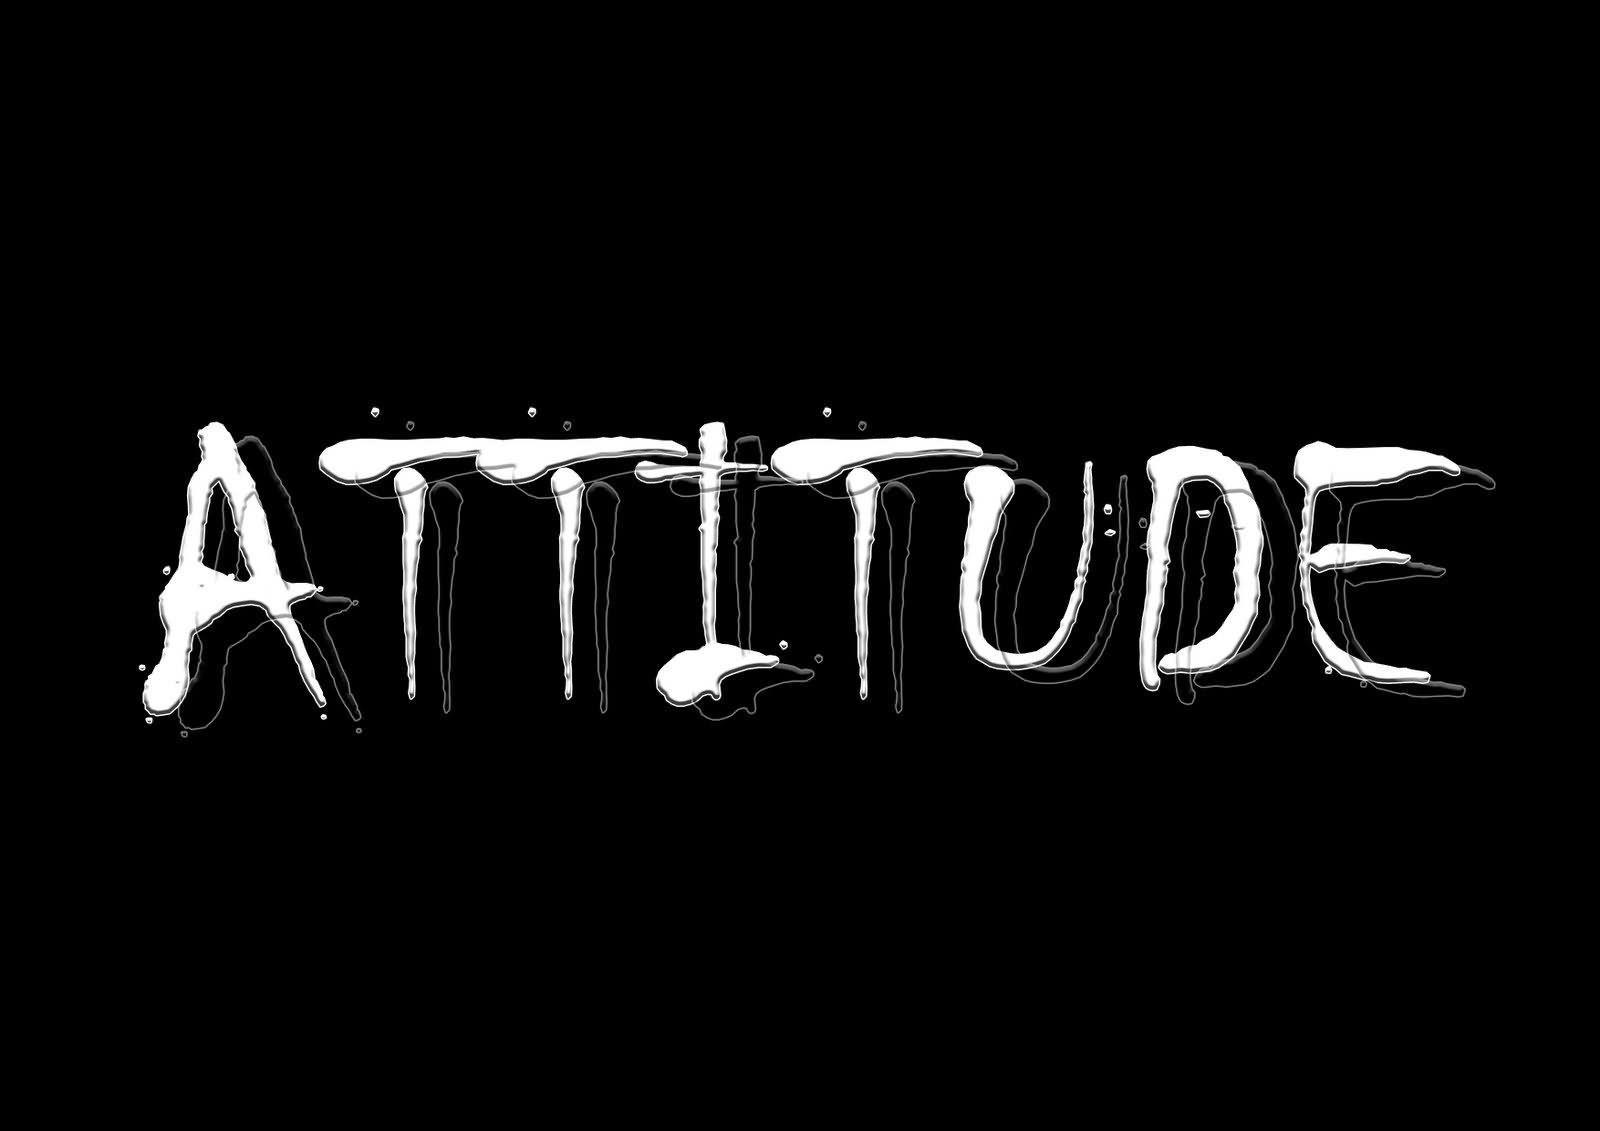 Attitude Wallpaper, 46 Desktop Image of Attitude